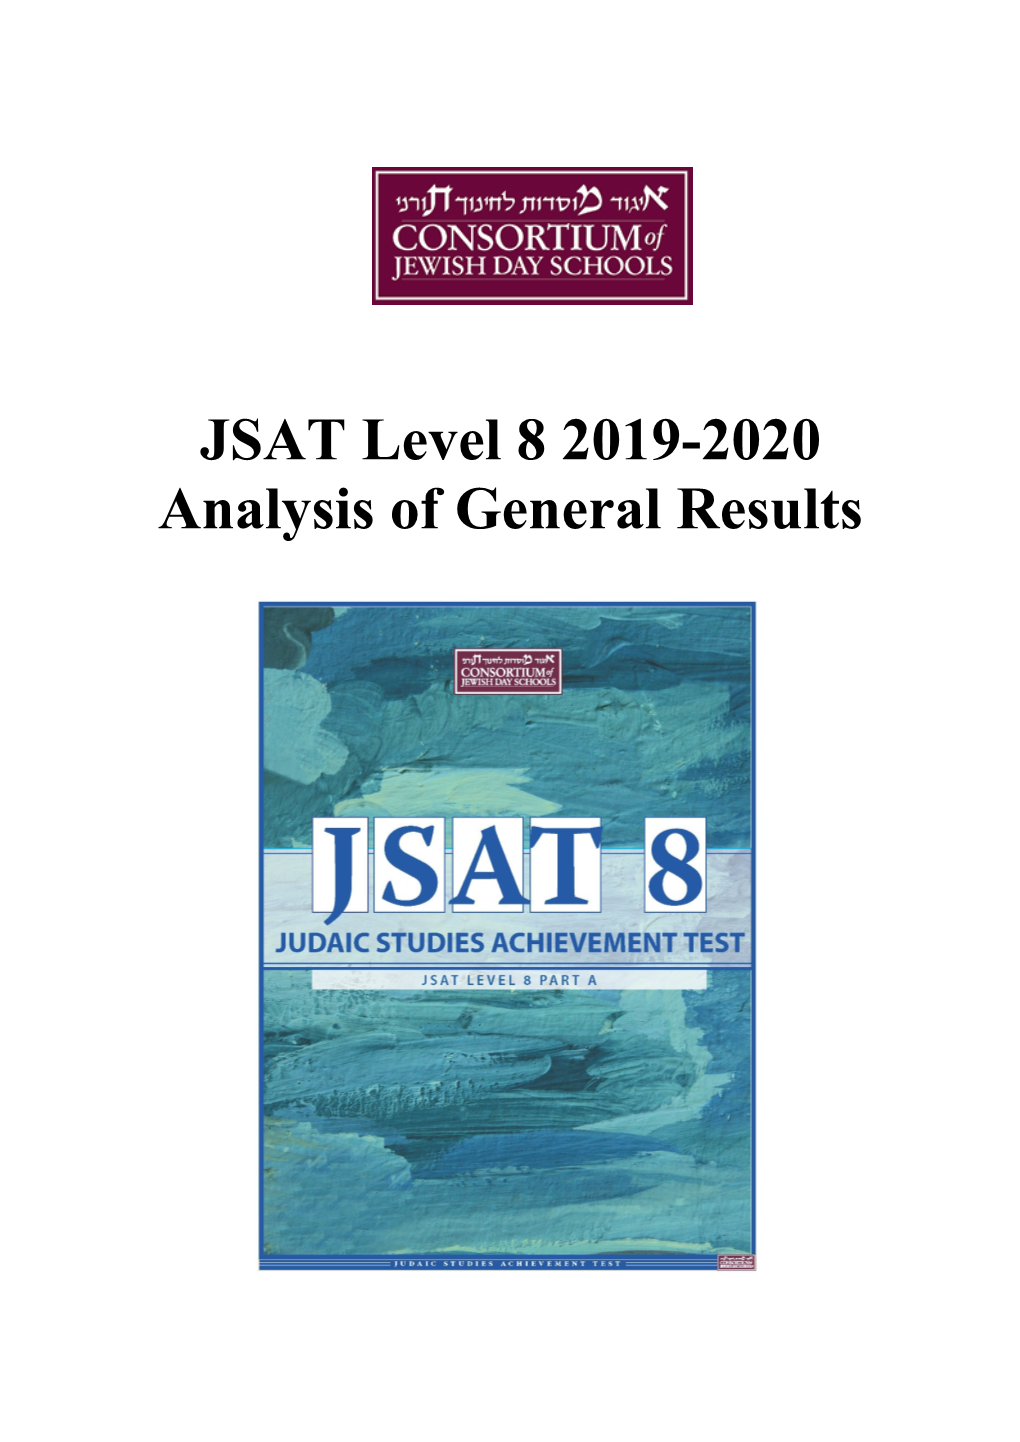 JSAT Level 8 2019-2020 Analysis of General Results